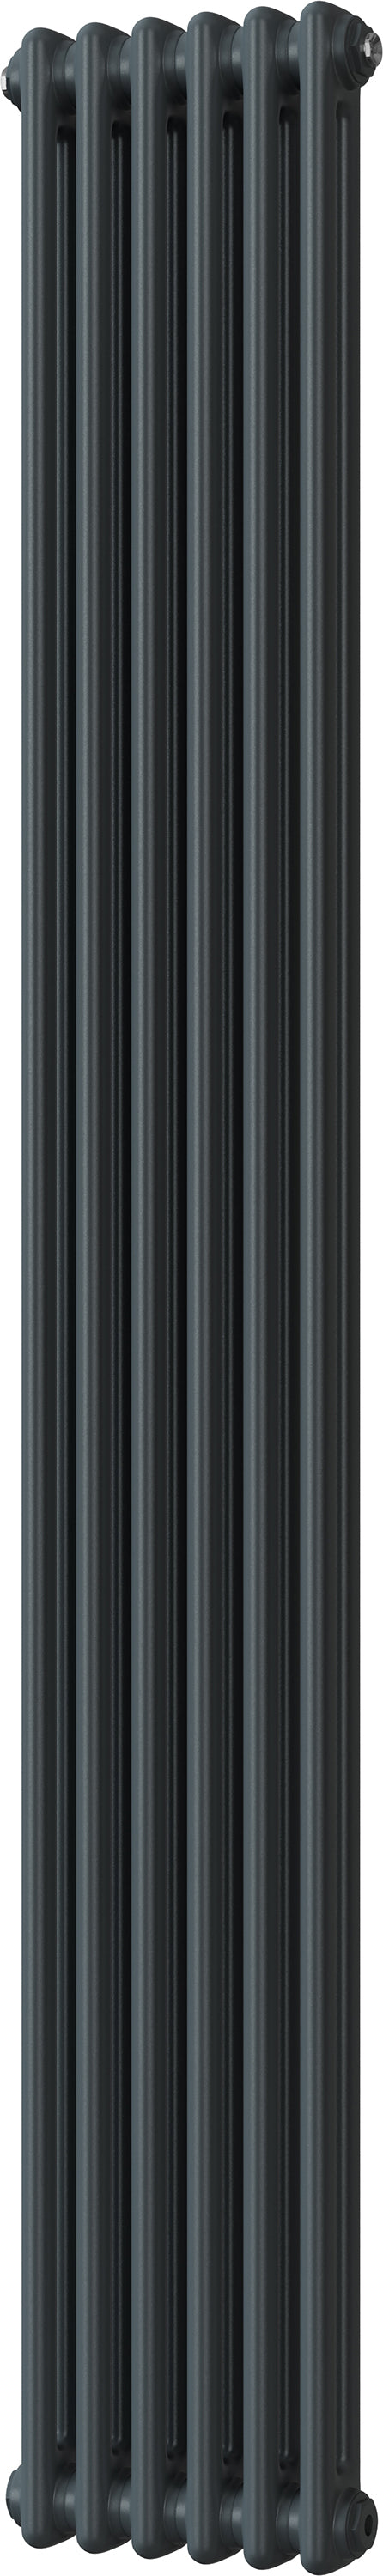 Alpha - Anthracite Vertical Column Radiator H1800mm x W284mm 2 Column